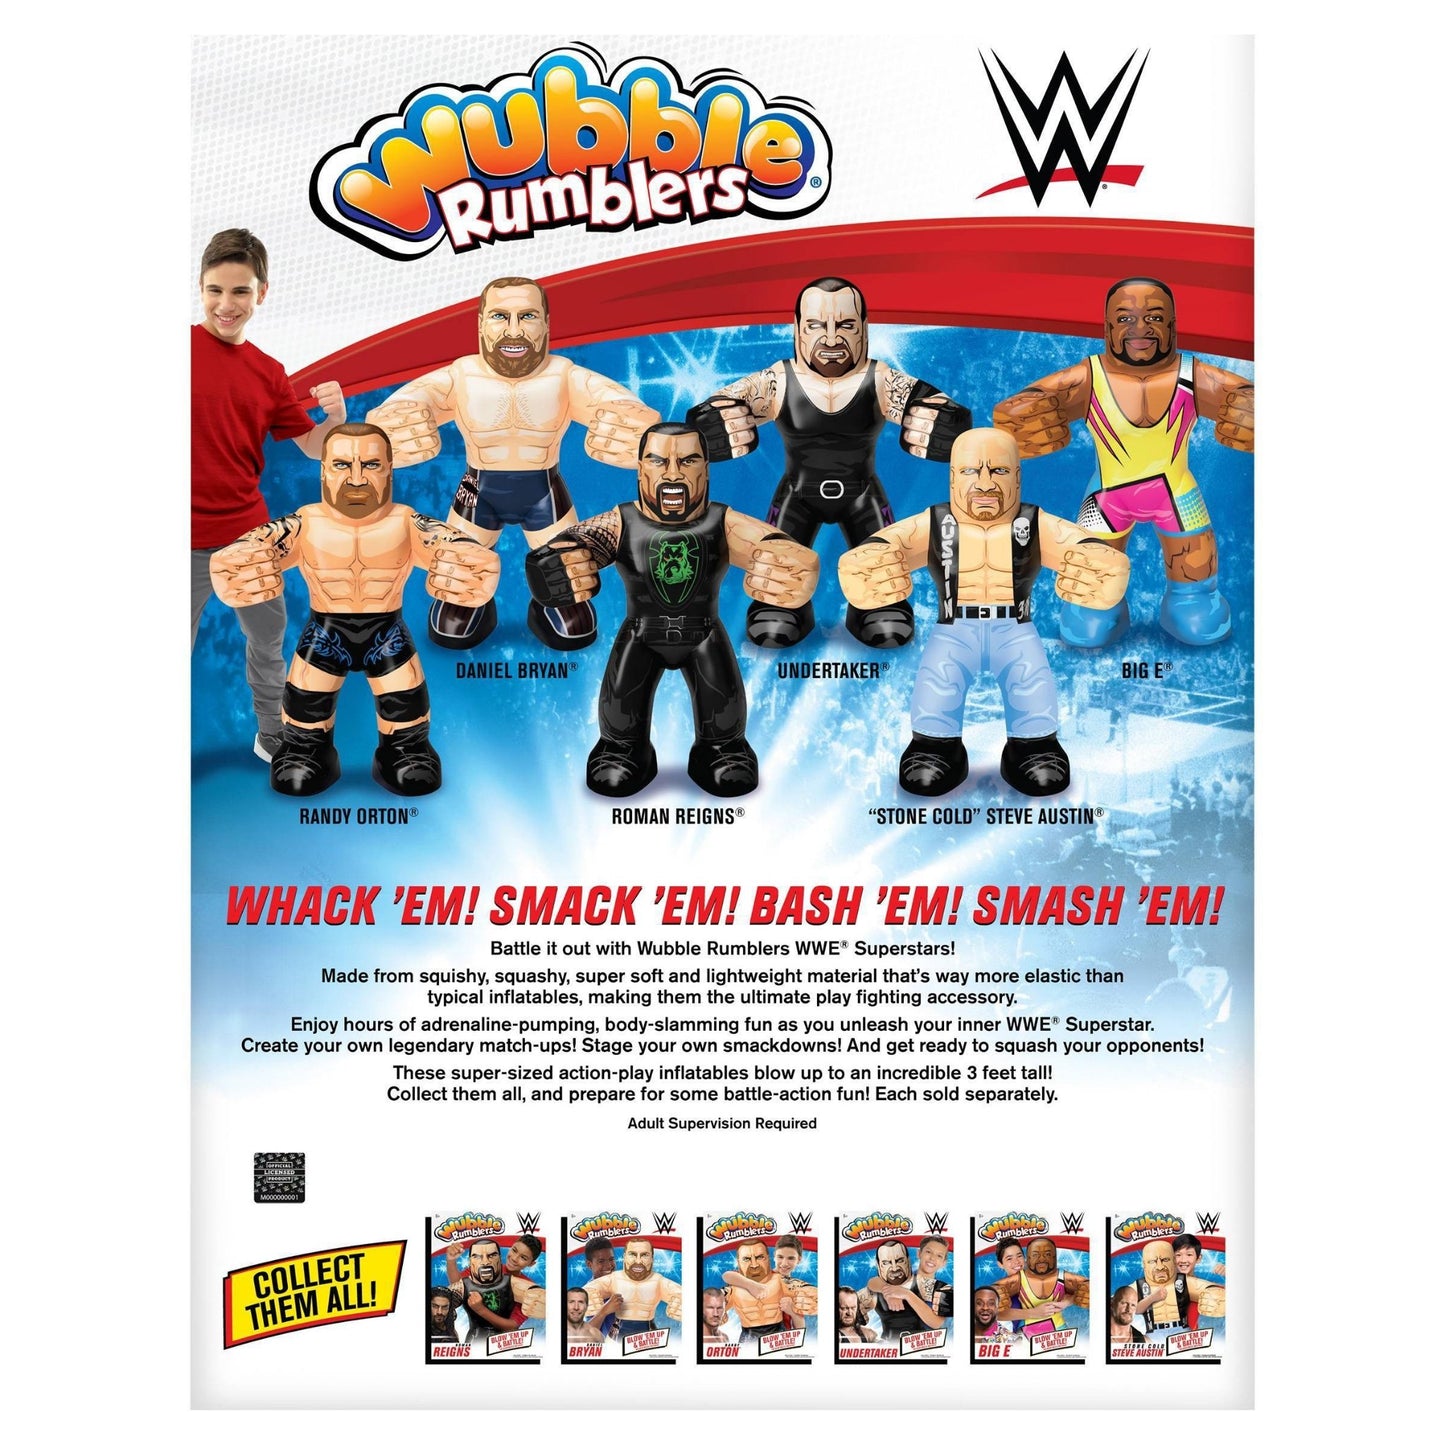 Wubble Rumblers Randy Orton inflatable